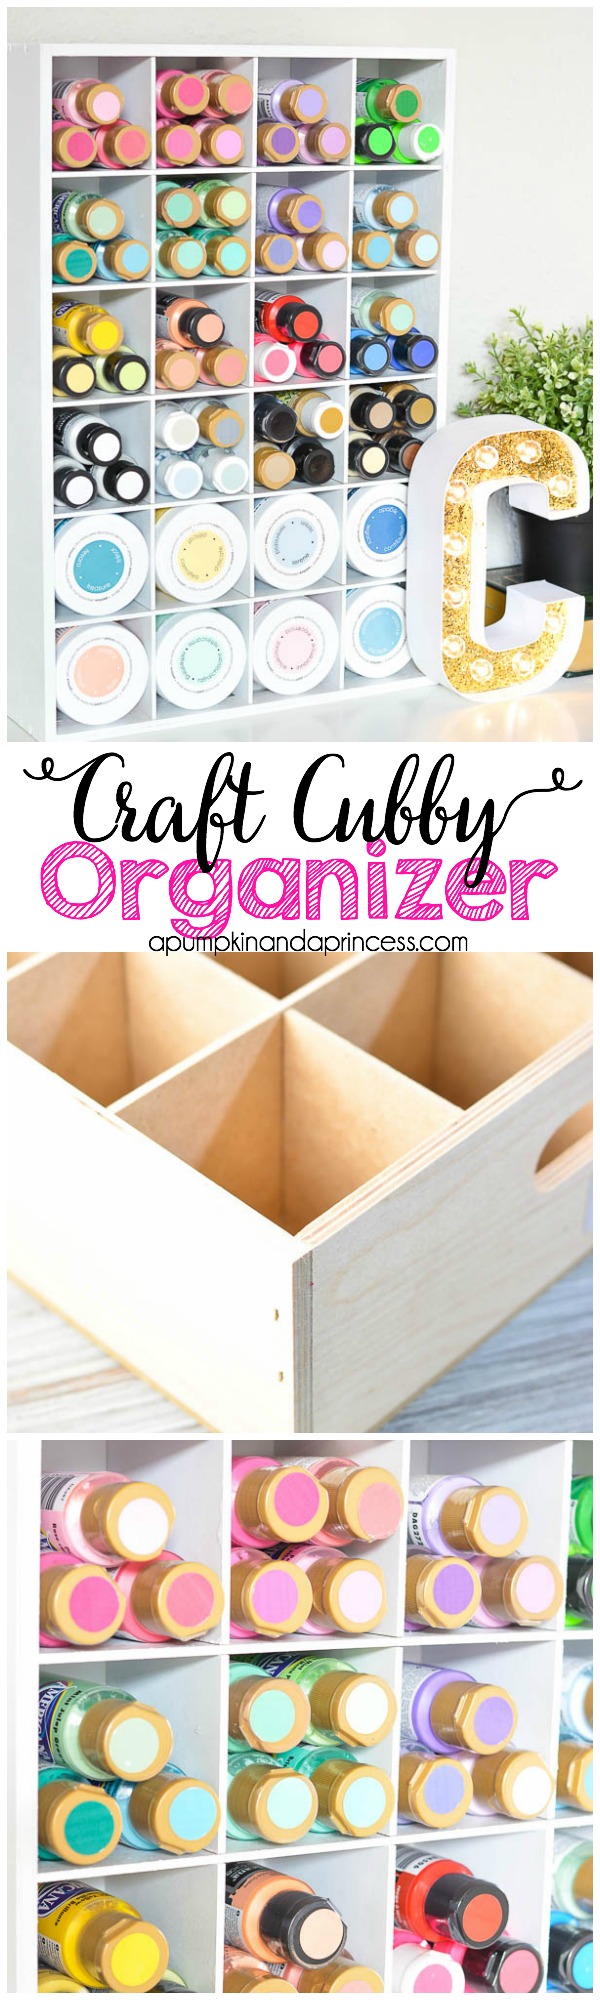 Craft Cubby Organizer